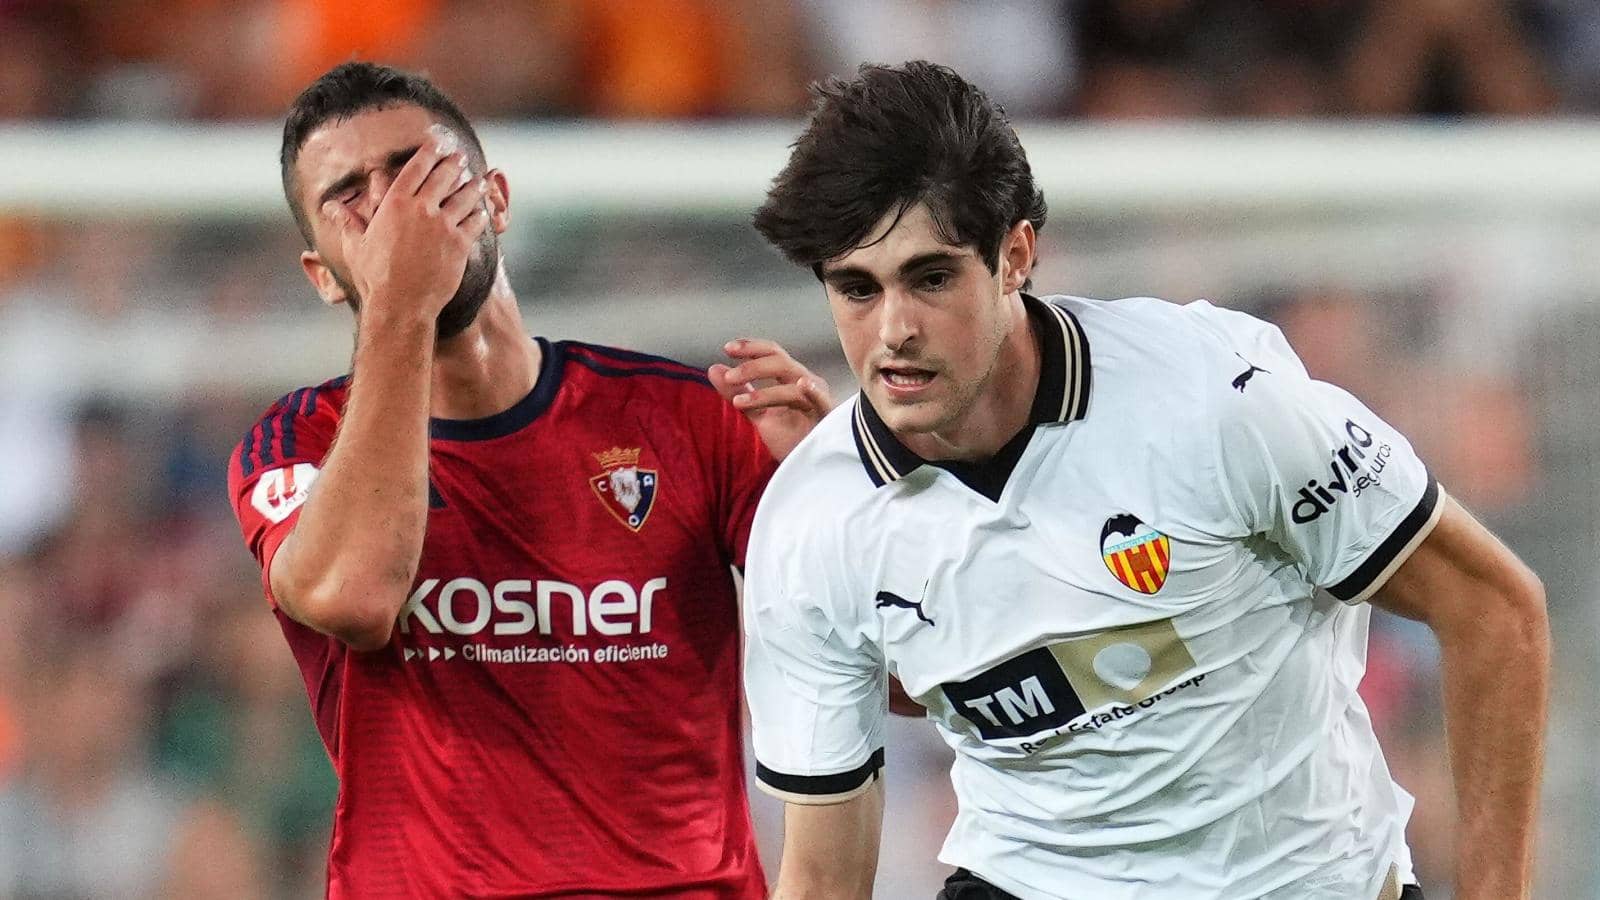 Osasuna midfielder Iker Munoz and Valencia starlet Javi Guerra